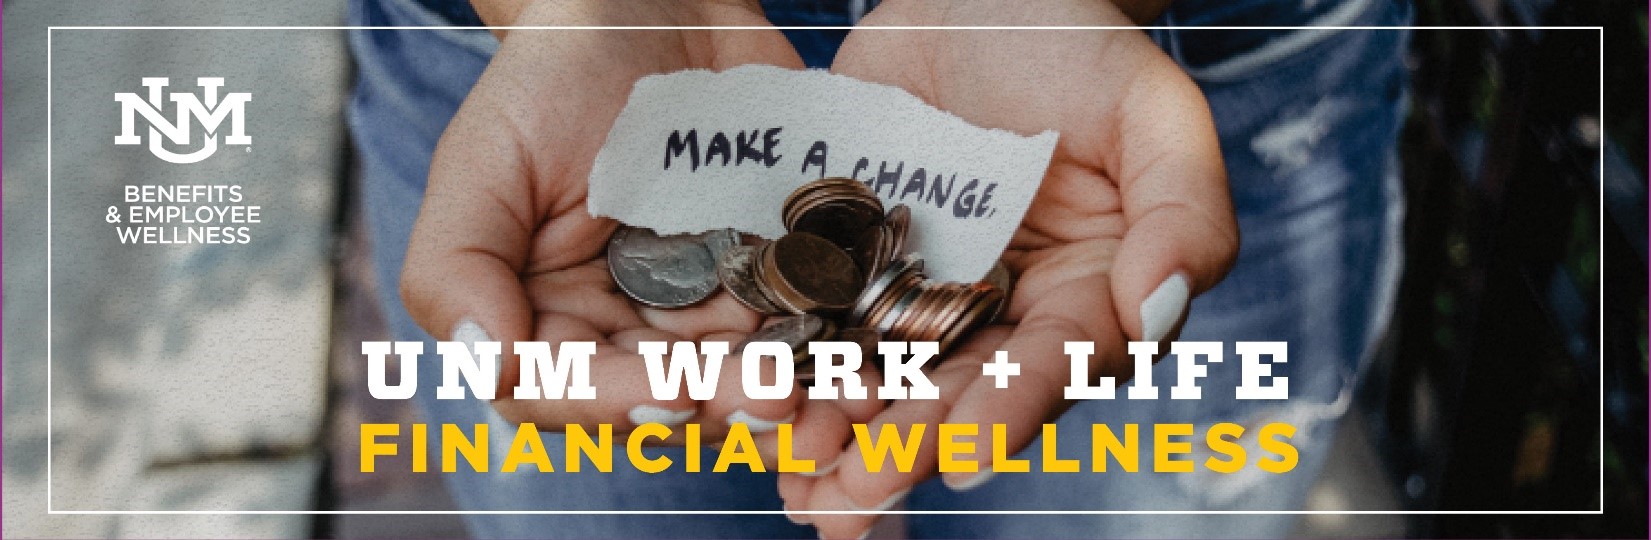 UNM Work & Life: Financial Wellness Program